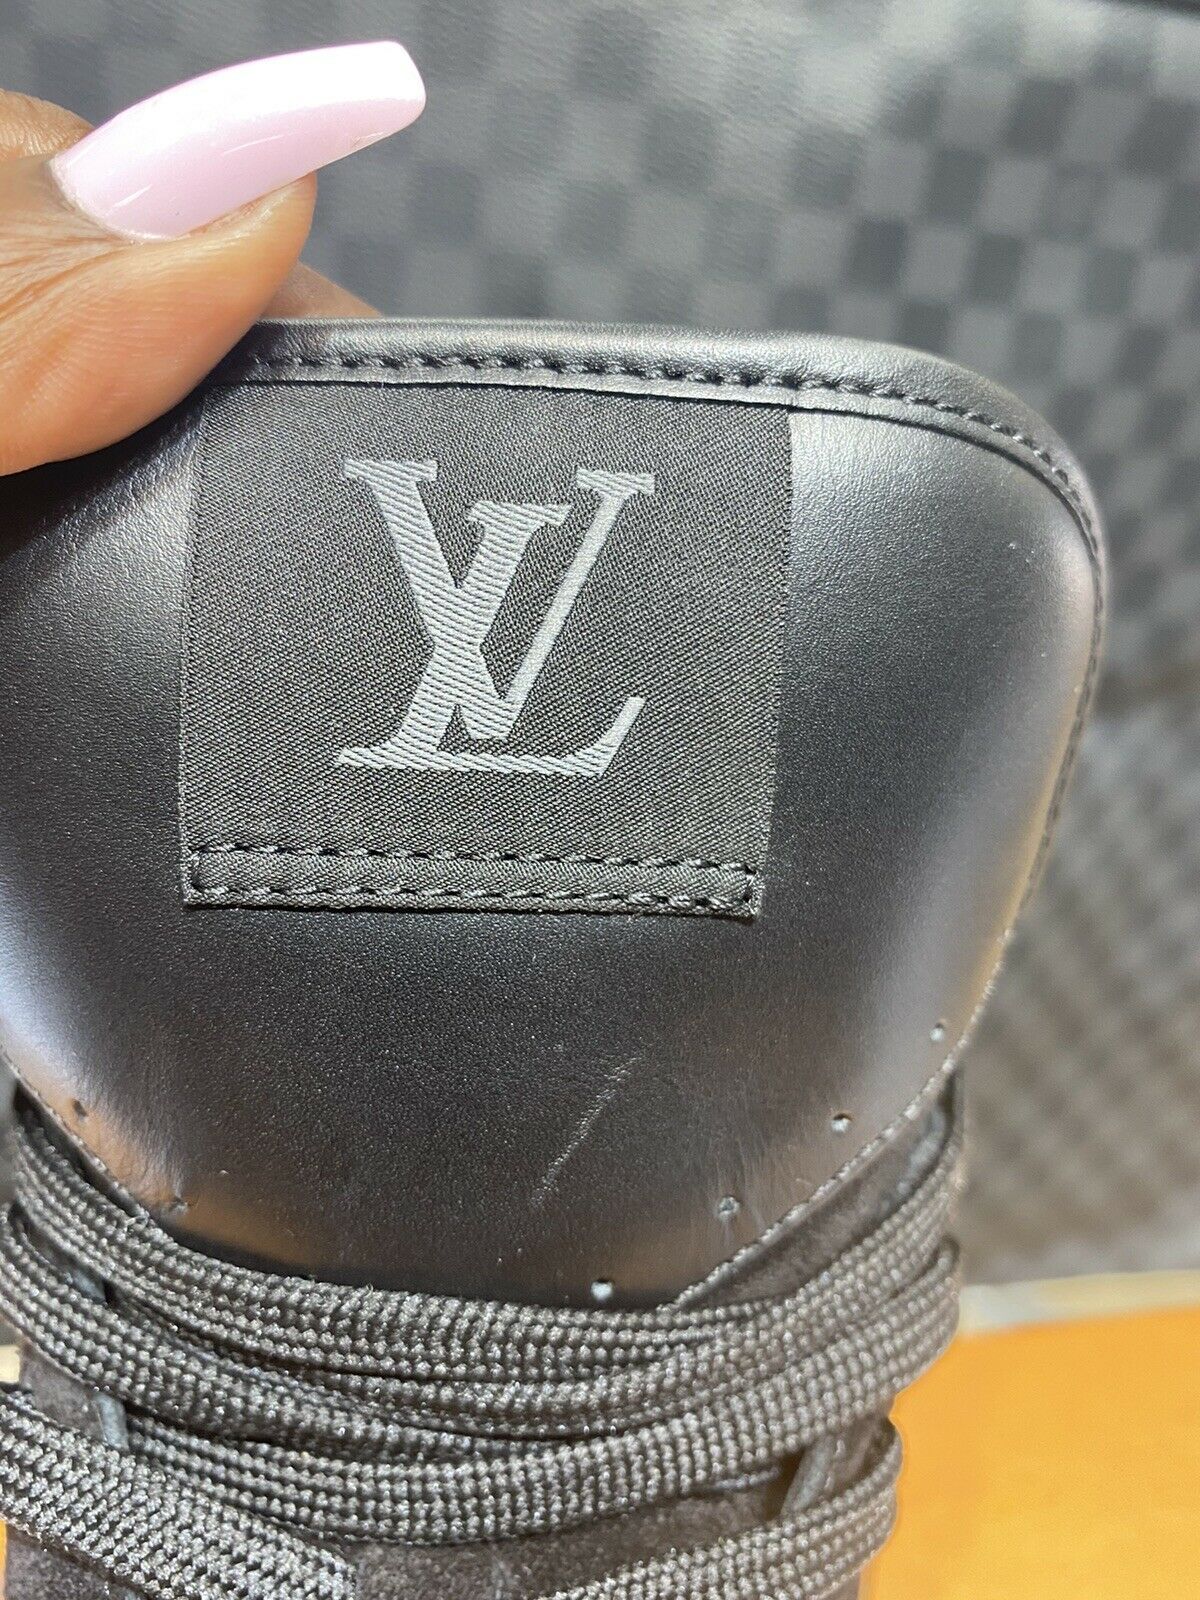 Louis Vuitton Louis Vuitton x Virgil Abloh White Iridescent Rivoli Sneaker